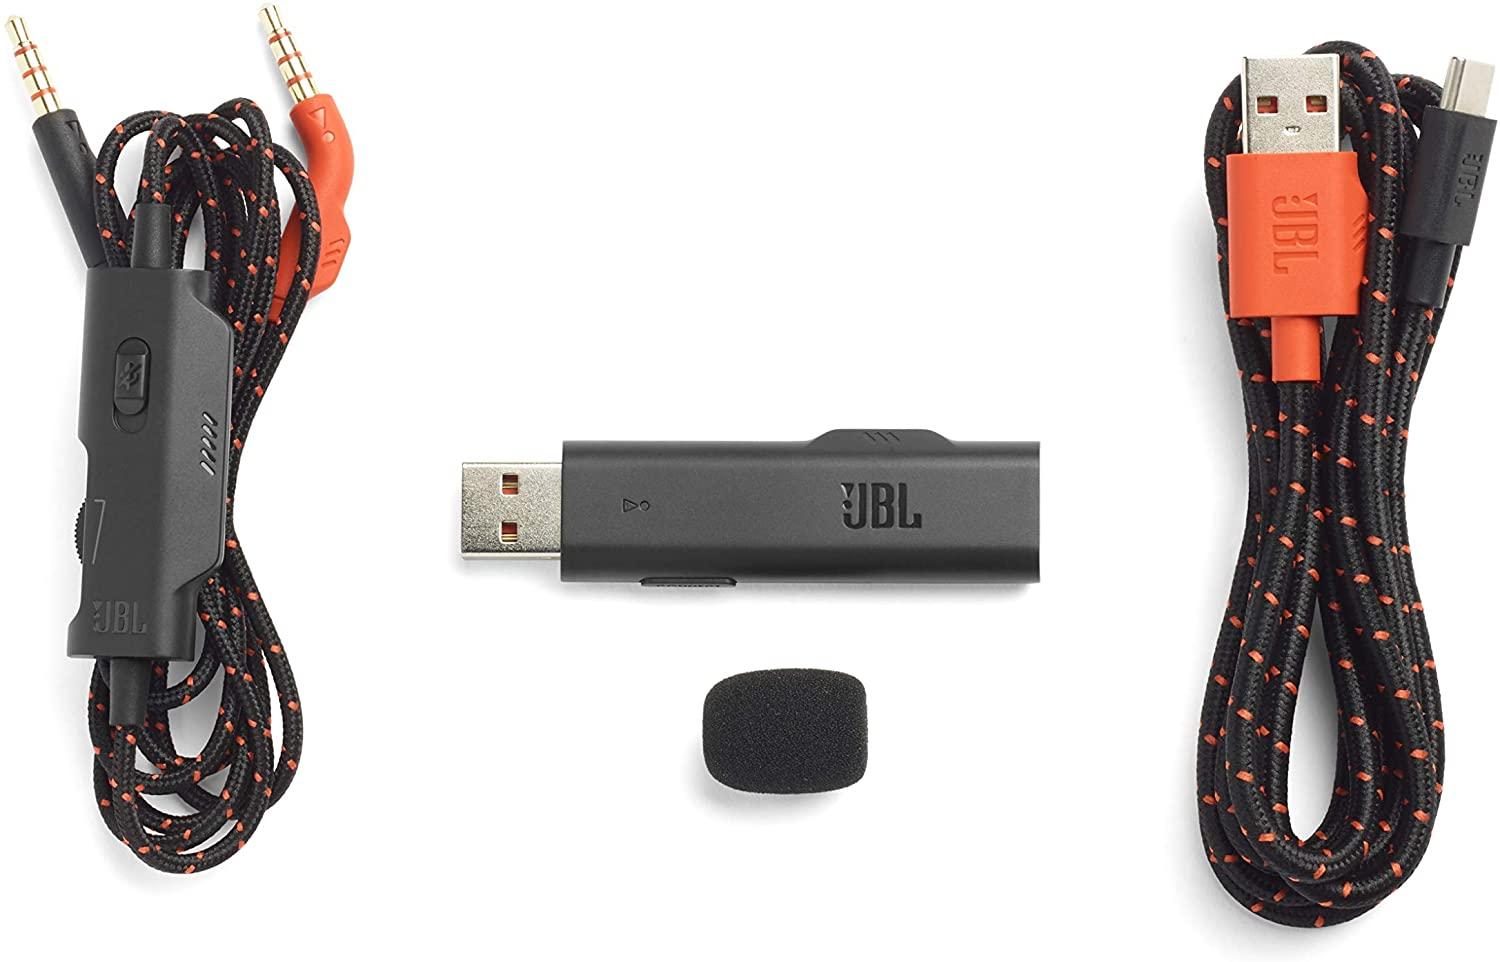 Slike JBL Slušalice QUANTUM 800 Wireless & Bluetooth crne